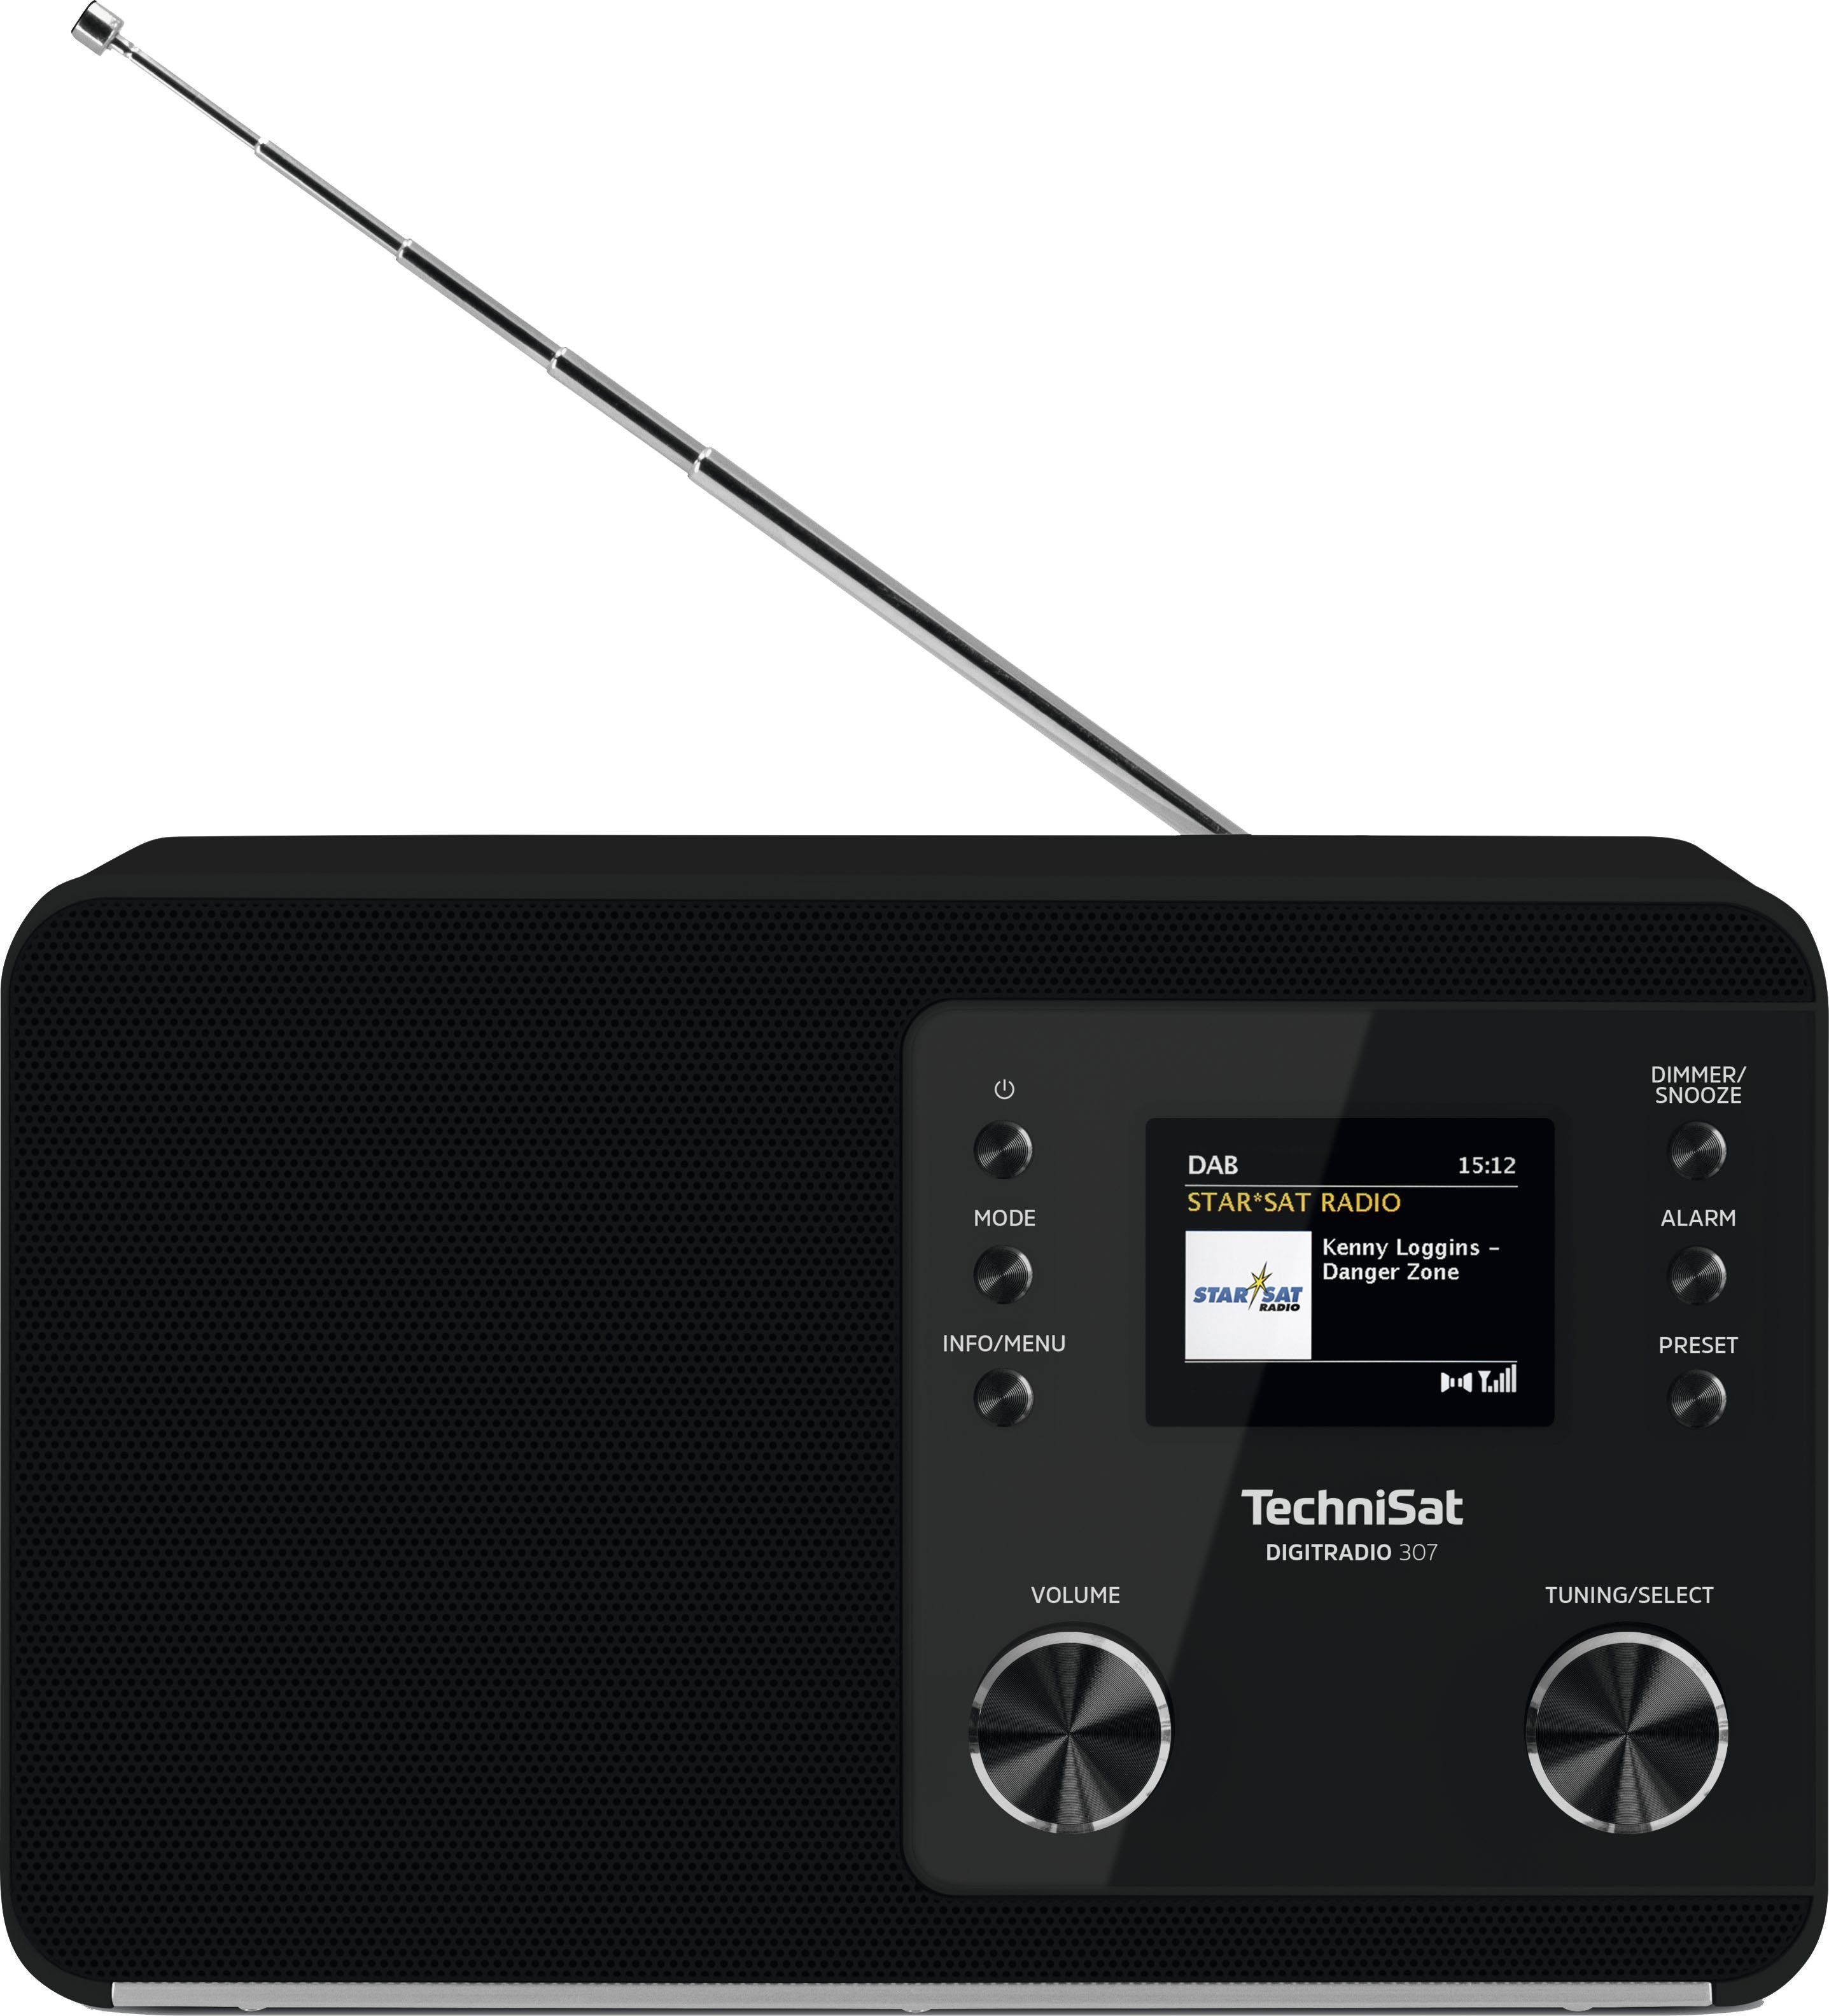 TechniSat Digitradio 307 5 5 RDS, (DAB) (RMS) W W), mit UKW Monolautsprecher, Aux-Eingang, (Digitalradio Kopfhöreranschluss (DAB), Digitalradio